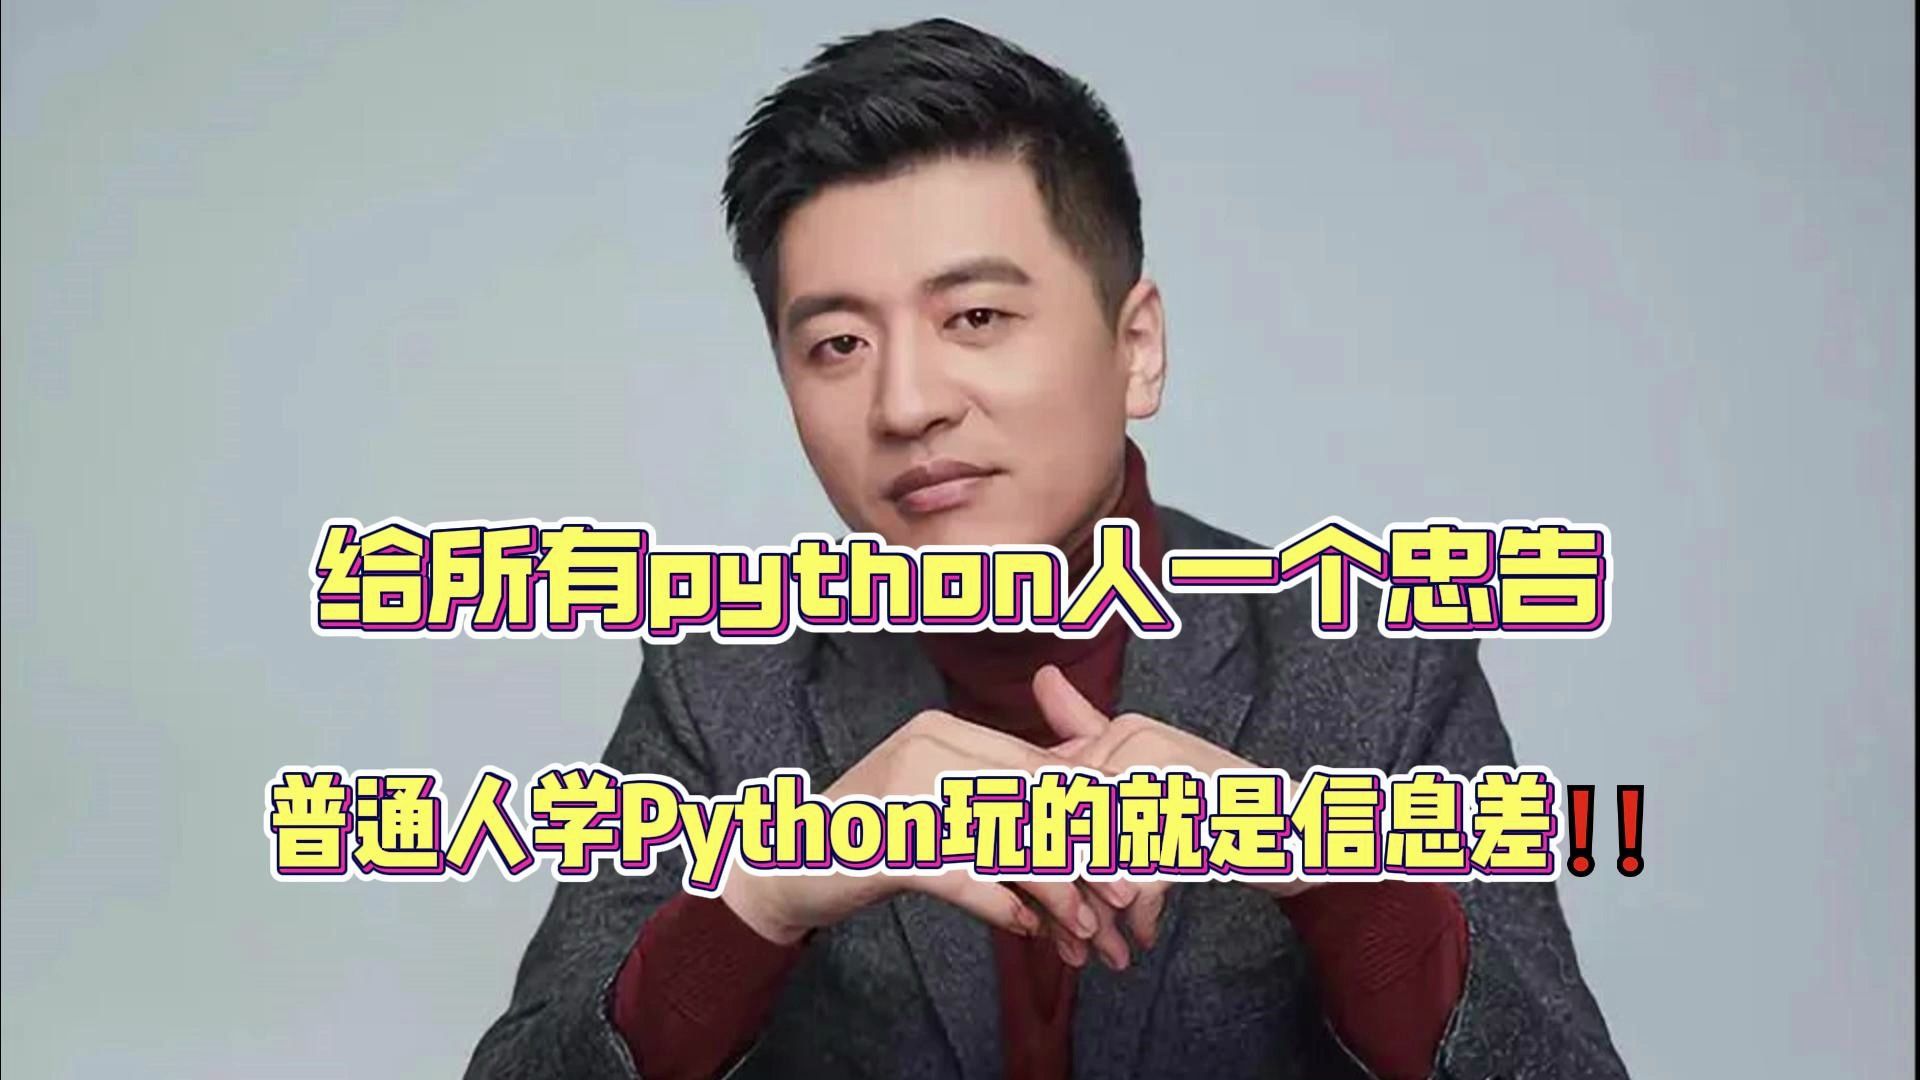 【python资料】张雪峰：给所有python人一个忠告，普通人学python玩的就是信息差！！！